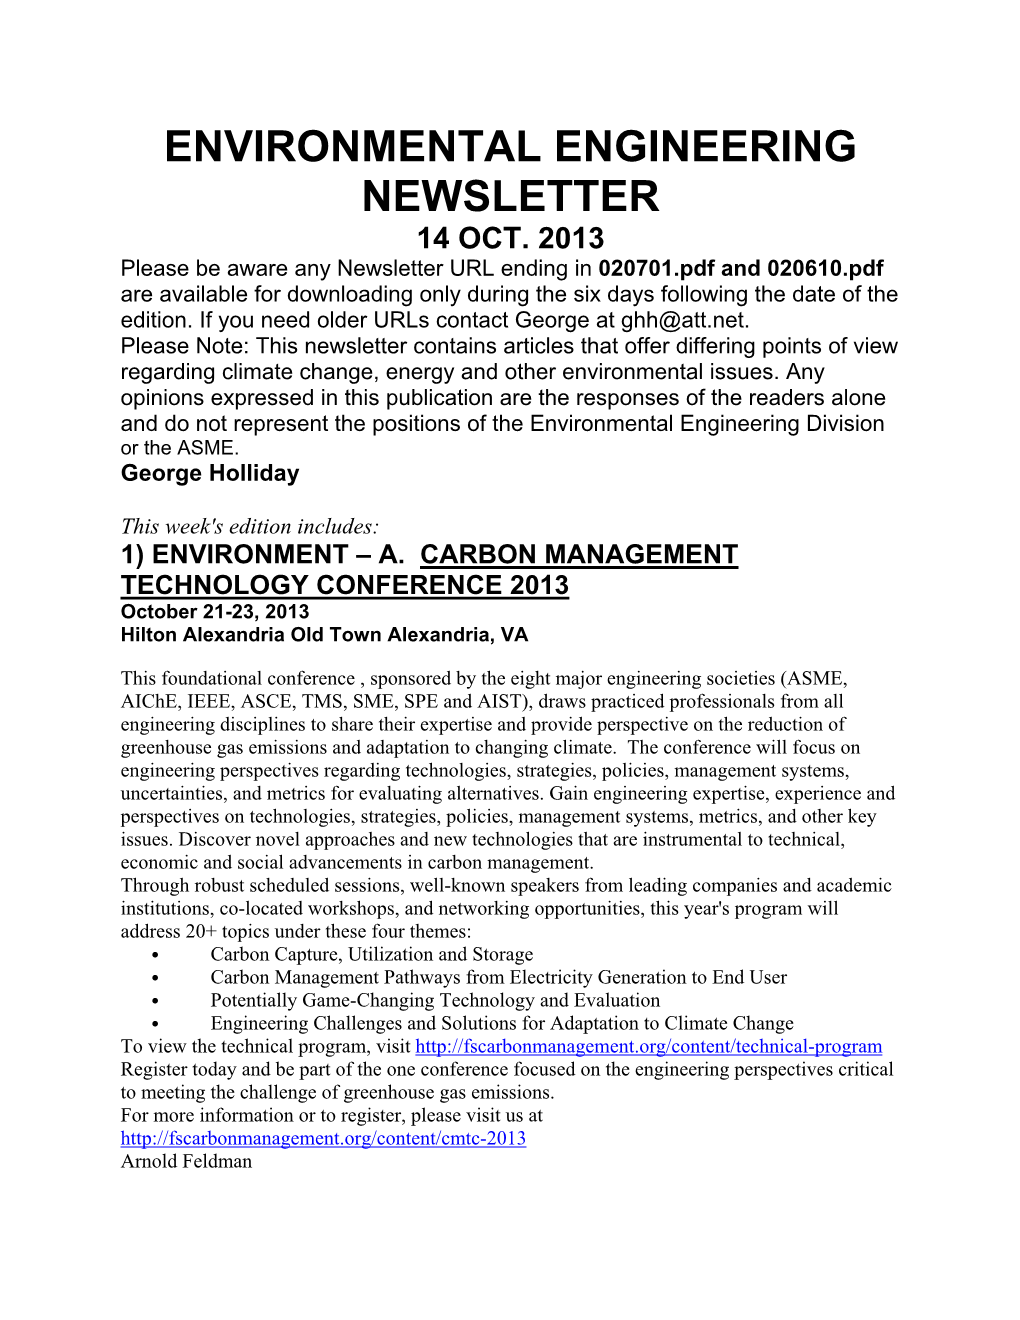 Environmental Engineering Newsletter 14 Oct